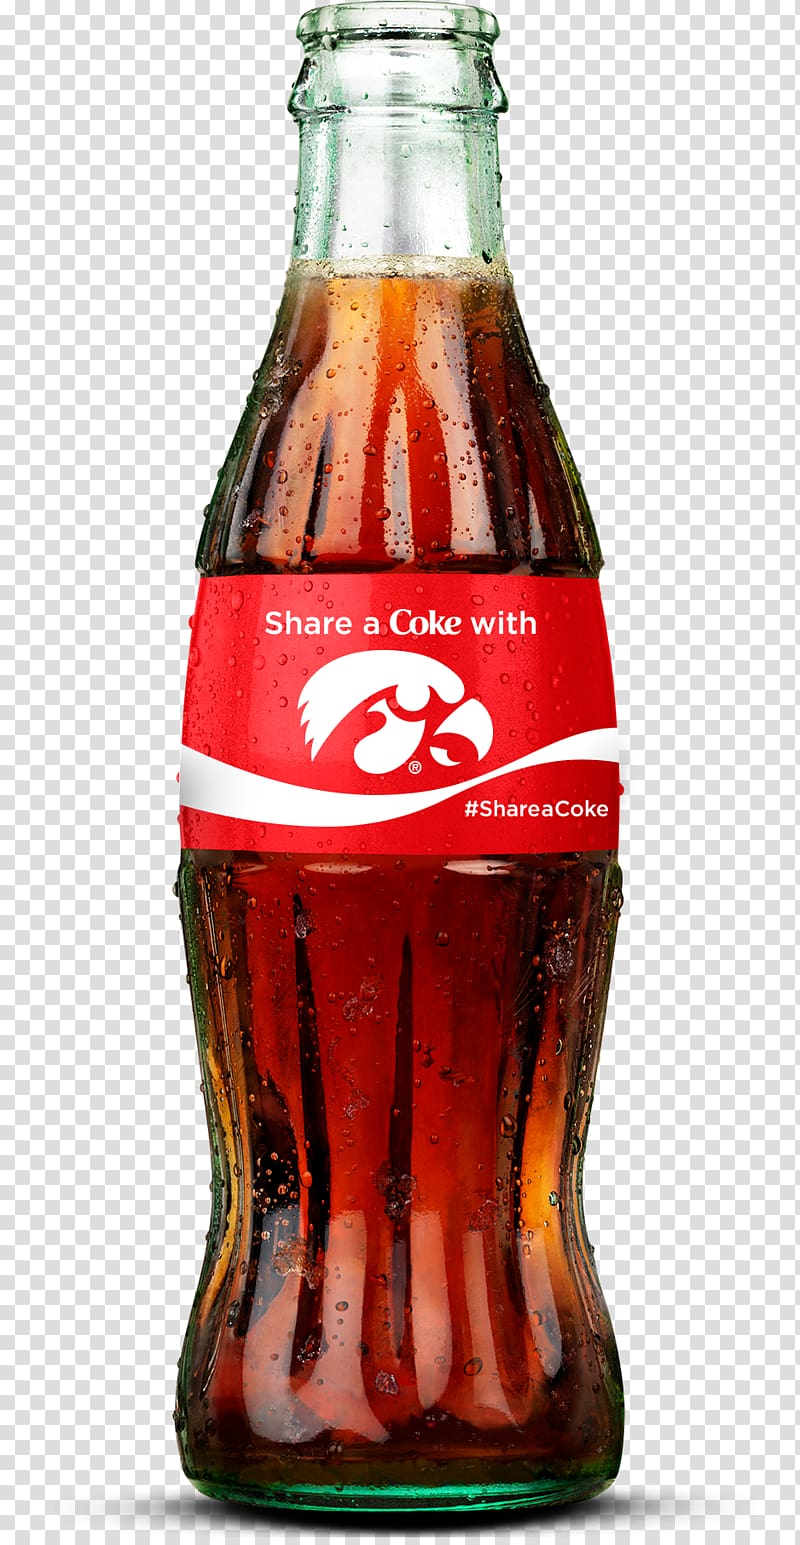 Coca-Cola Fizzy Drinks Diet Coke Bottle Share a Coke, coca cola transparent background PNG clipart